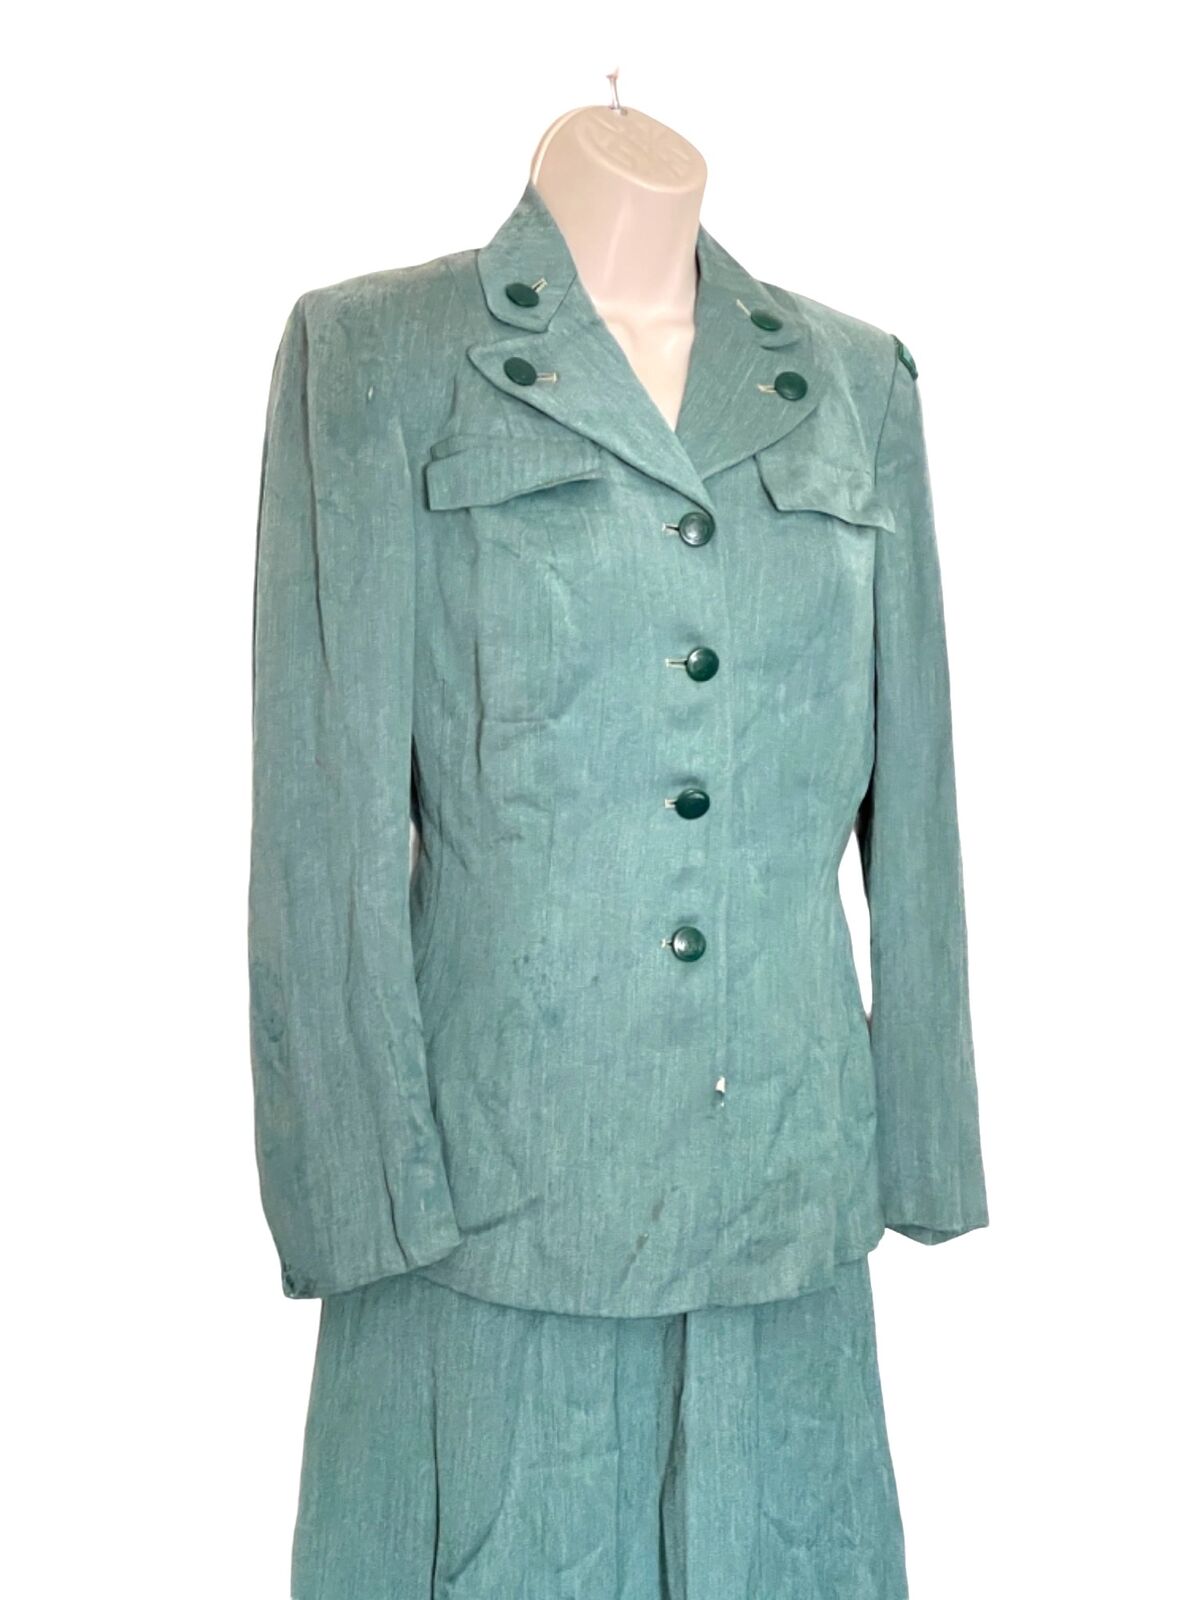 Vintage 1940s Girl Scouts of America Leader Green Uniform Jacket Skirt Costume